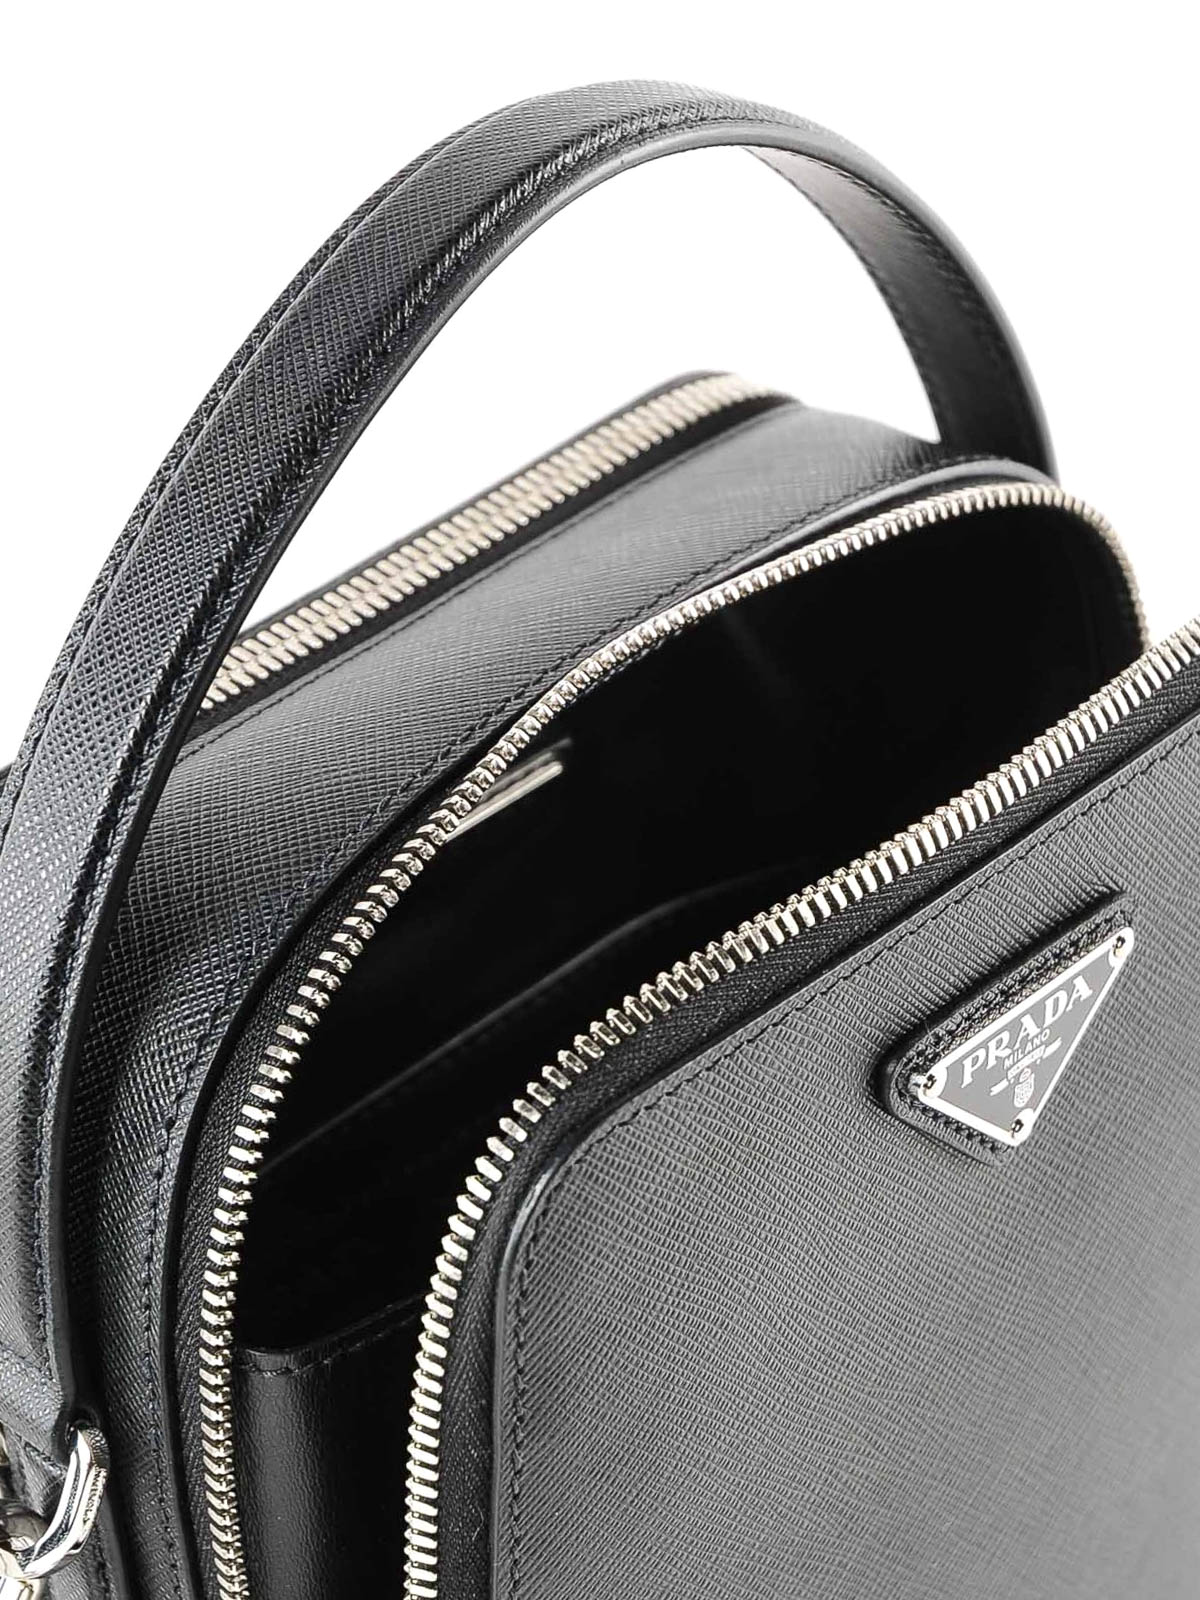 Prada Brique Saffiano Leather Cross Body Bag in Black for Men